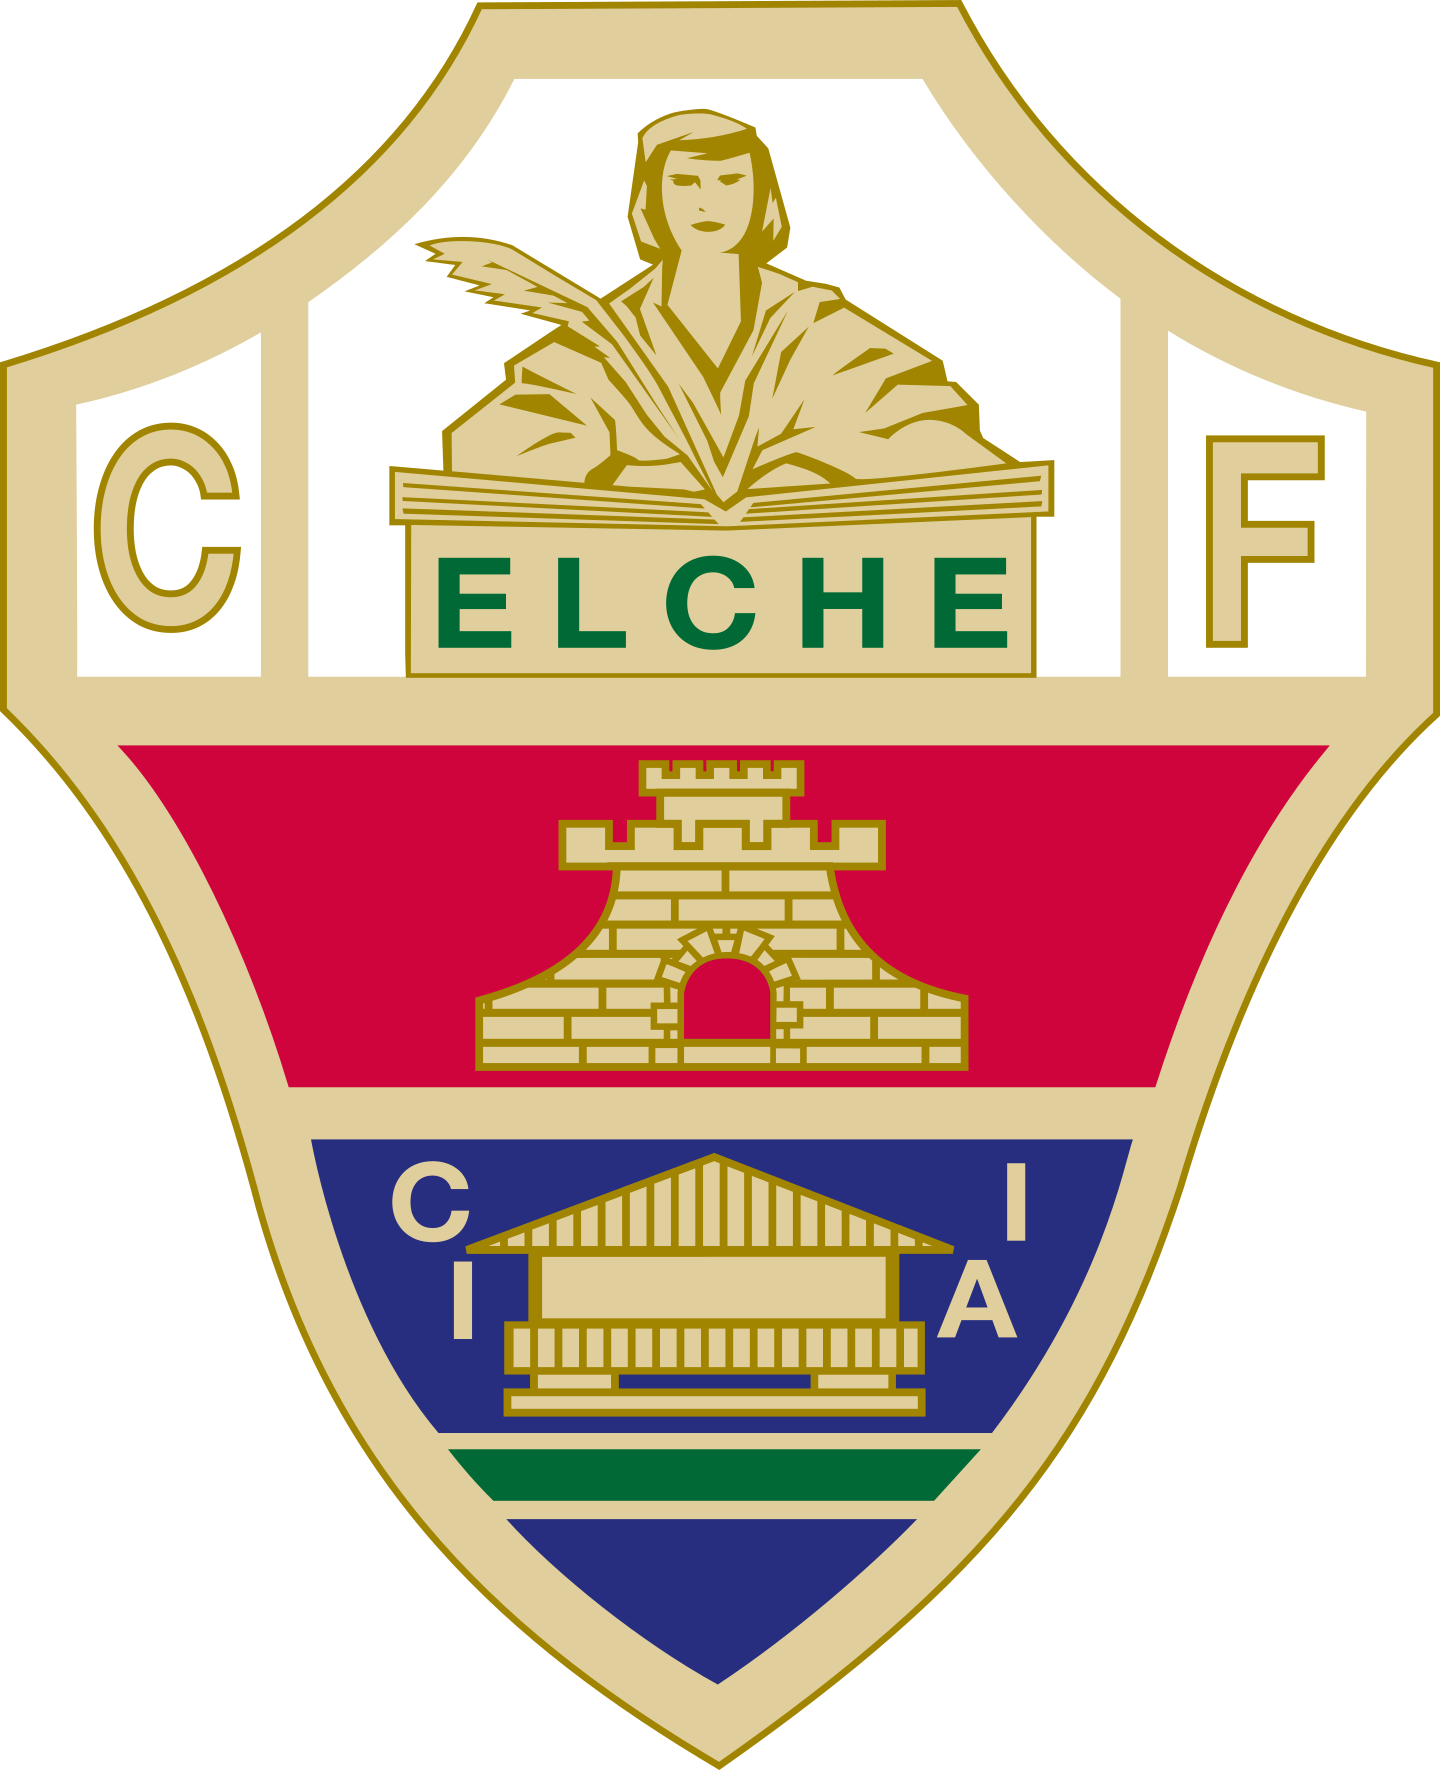 elche cf logo 2 - Elche CF Logo